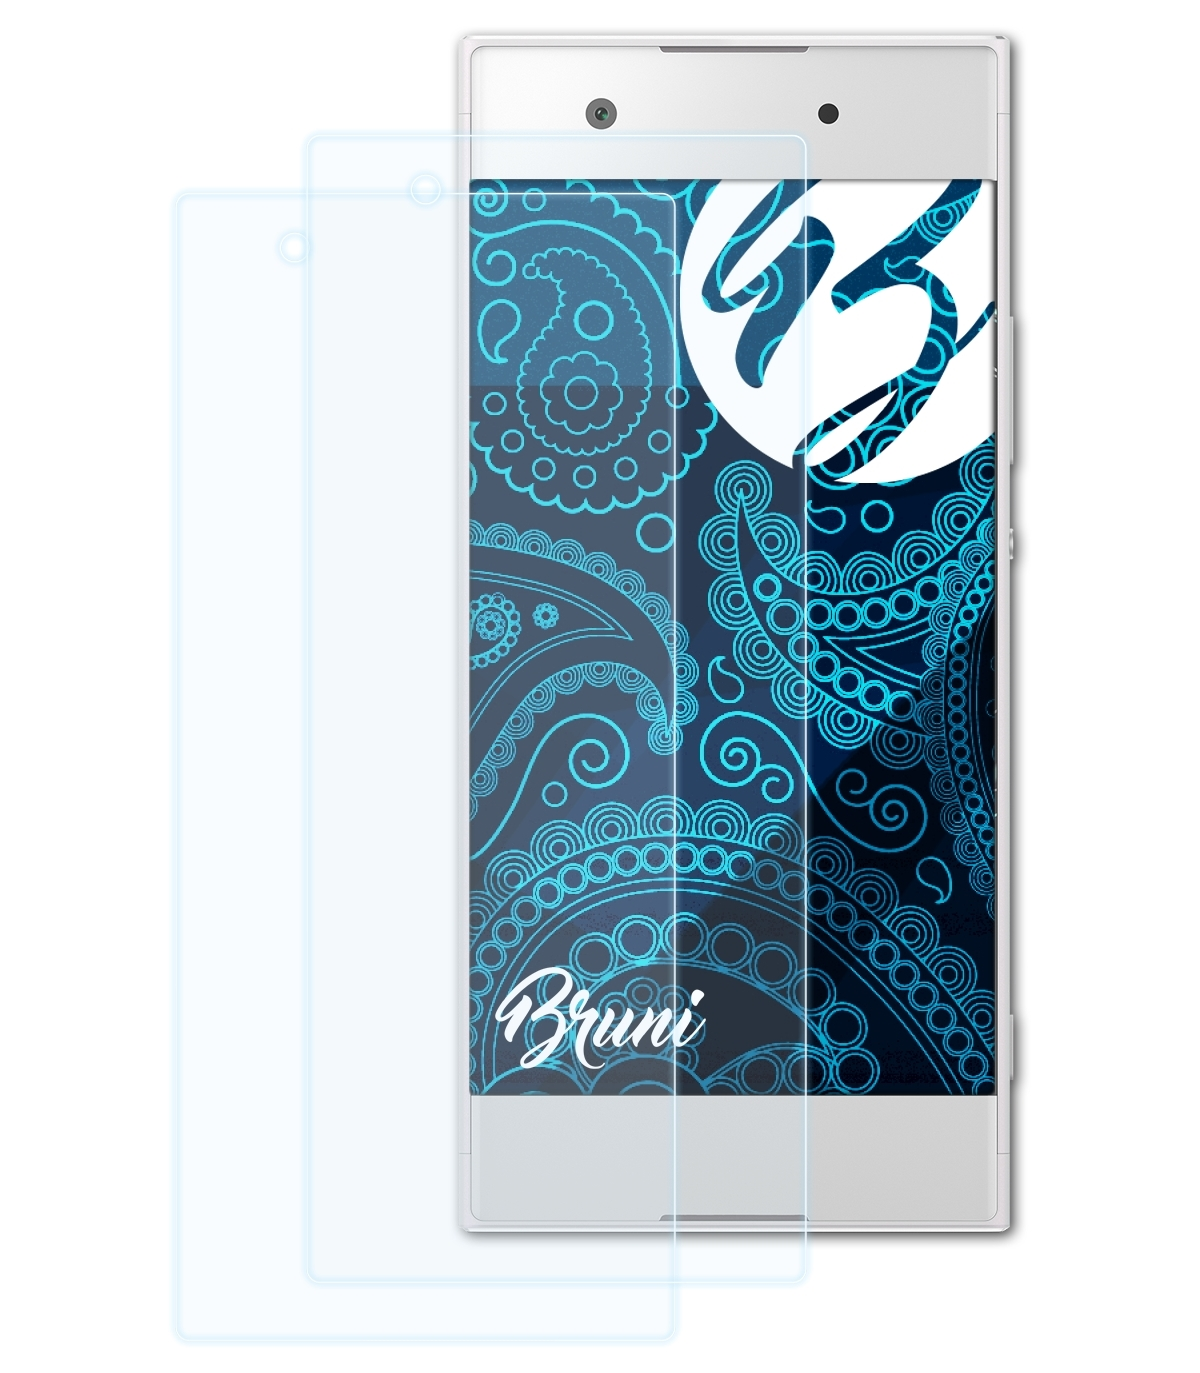 BRUNI 2x Basics-Clear Schutzfolie(für Sony Xperia XA1 Plus)